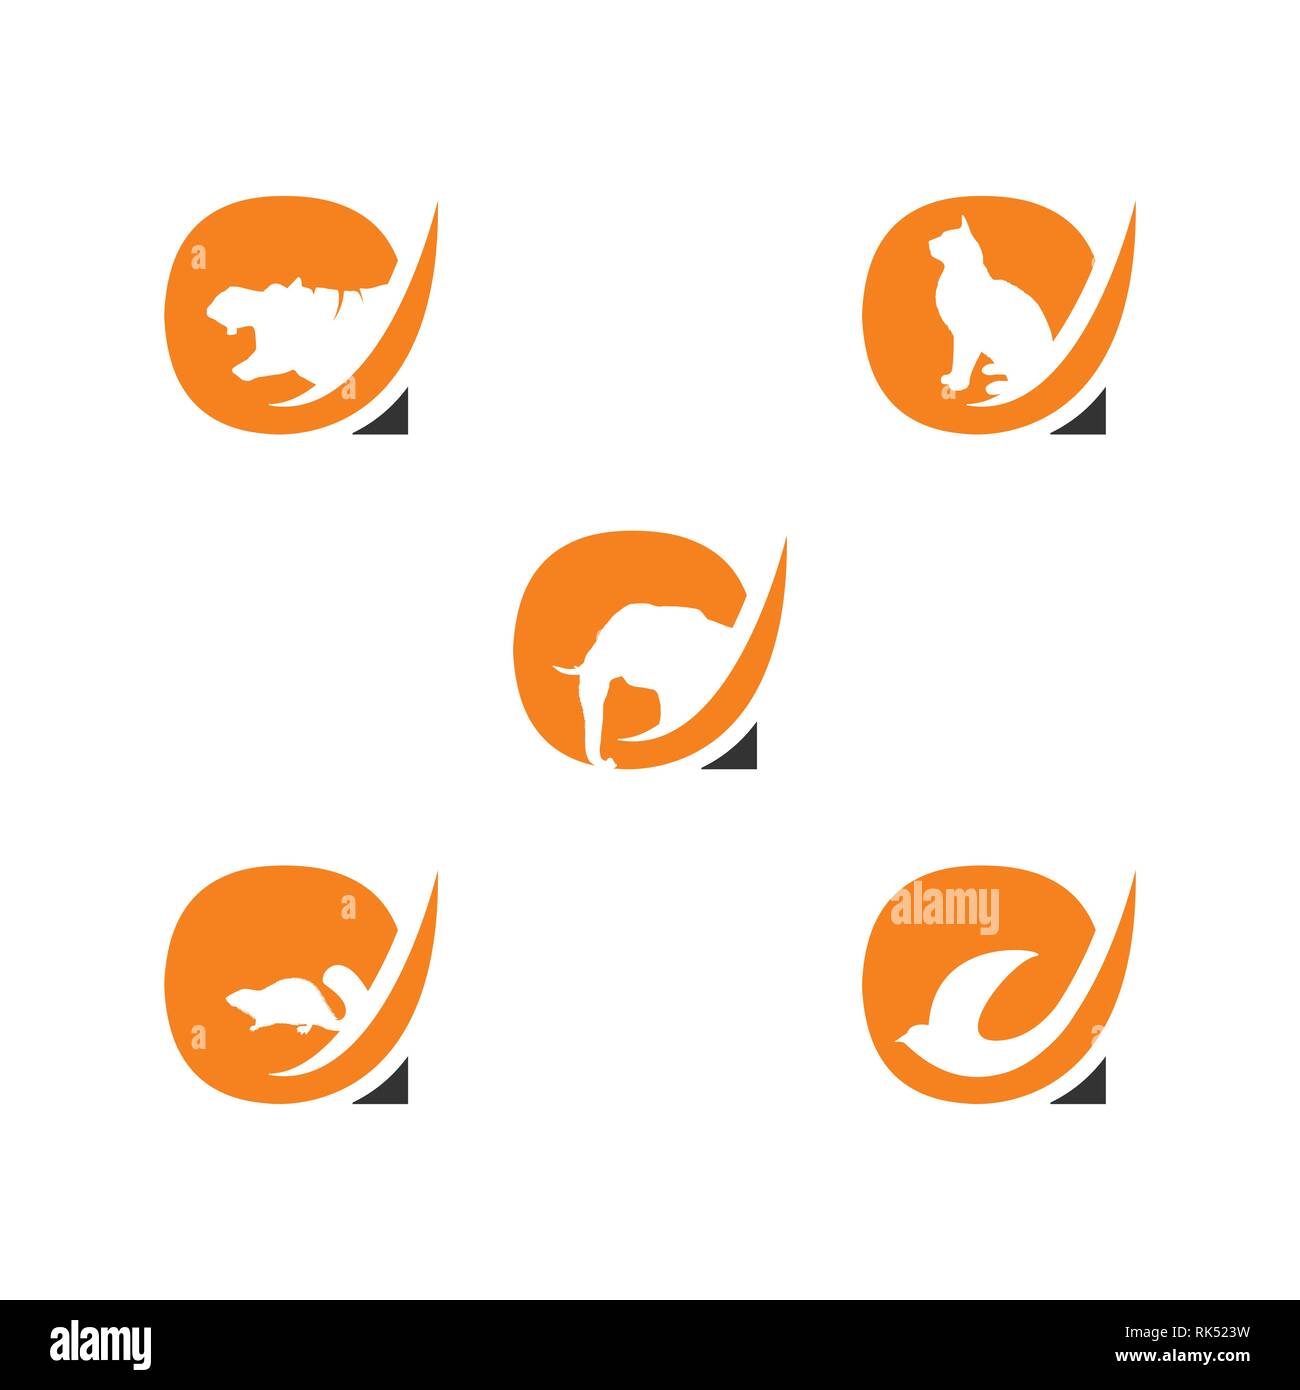 Letter A logo with animals negative space style design. Hippopotamus, cat, squirrel, bird negative style logo vector Stock Vector